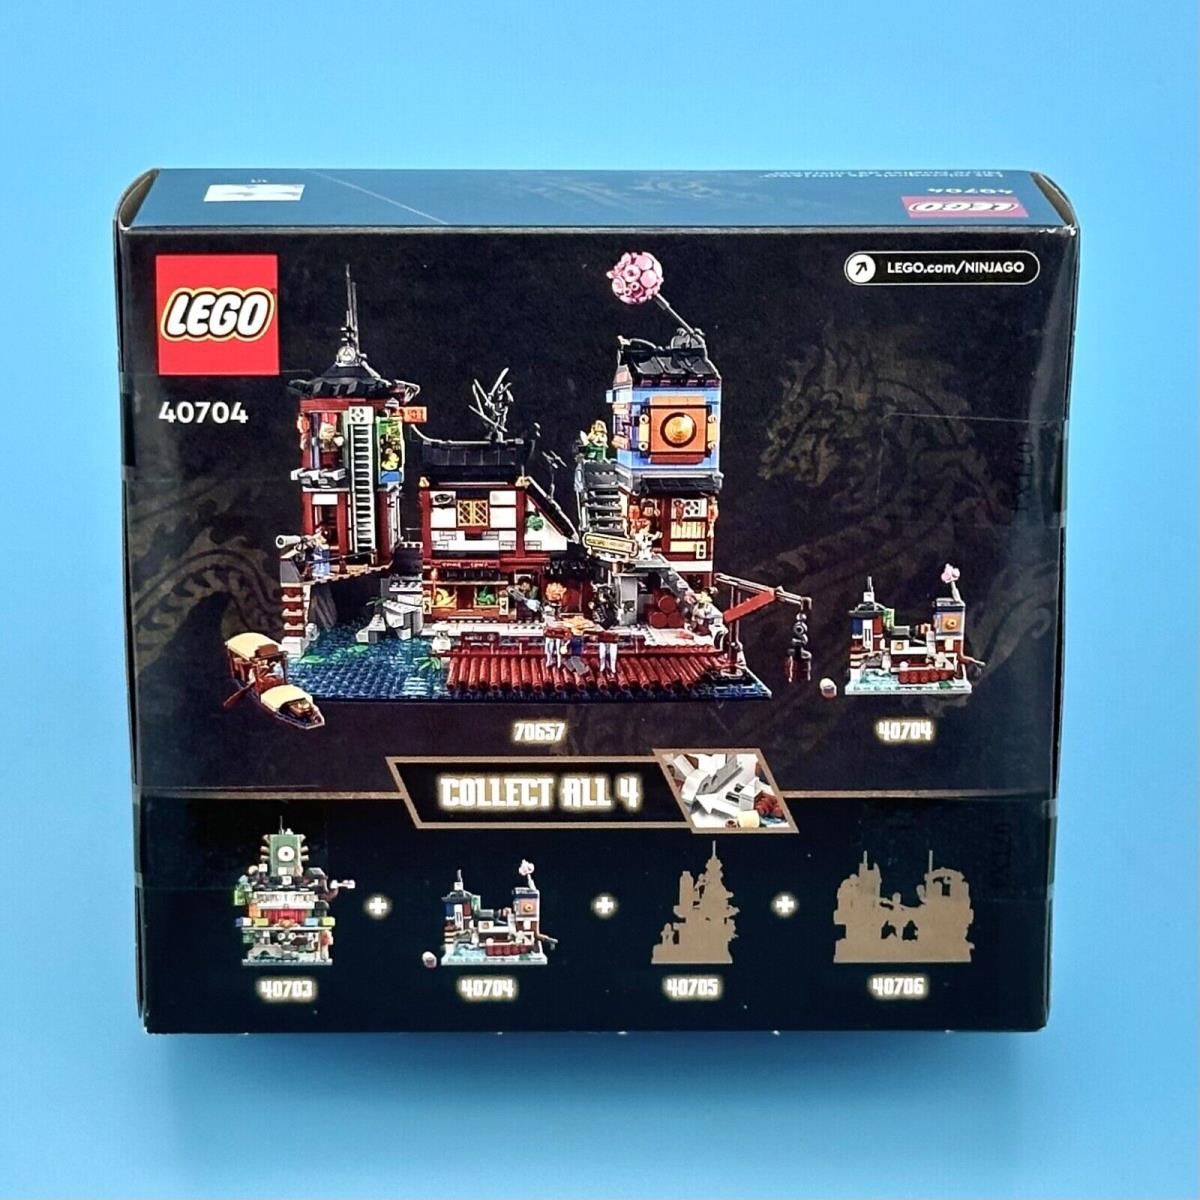 Lego Micro Ninjago Docks Modular Set Vip Insiders Reward 40704 Limited Edition